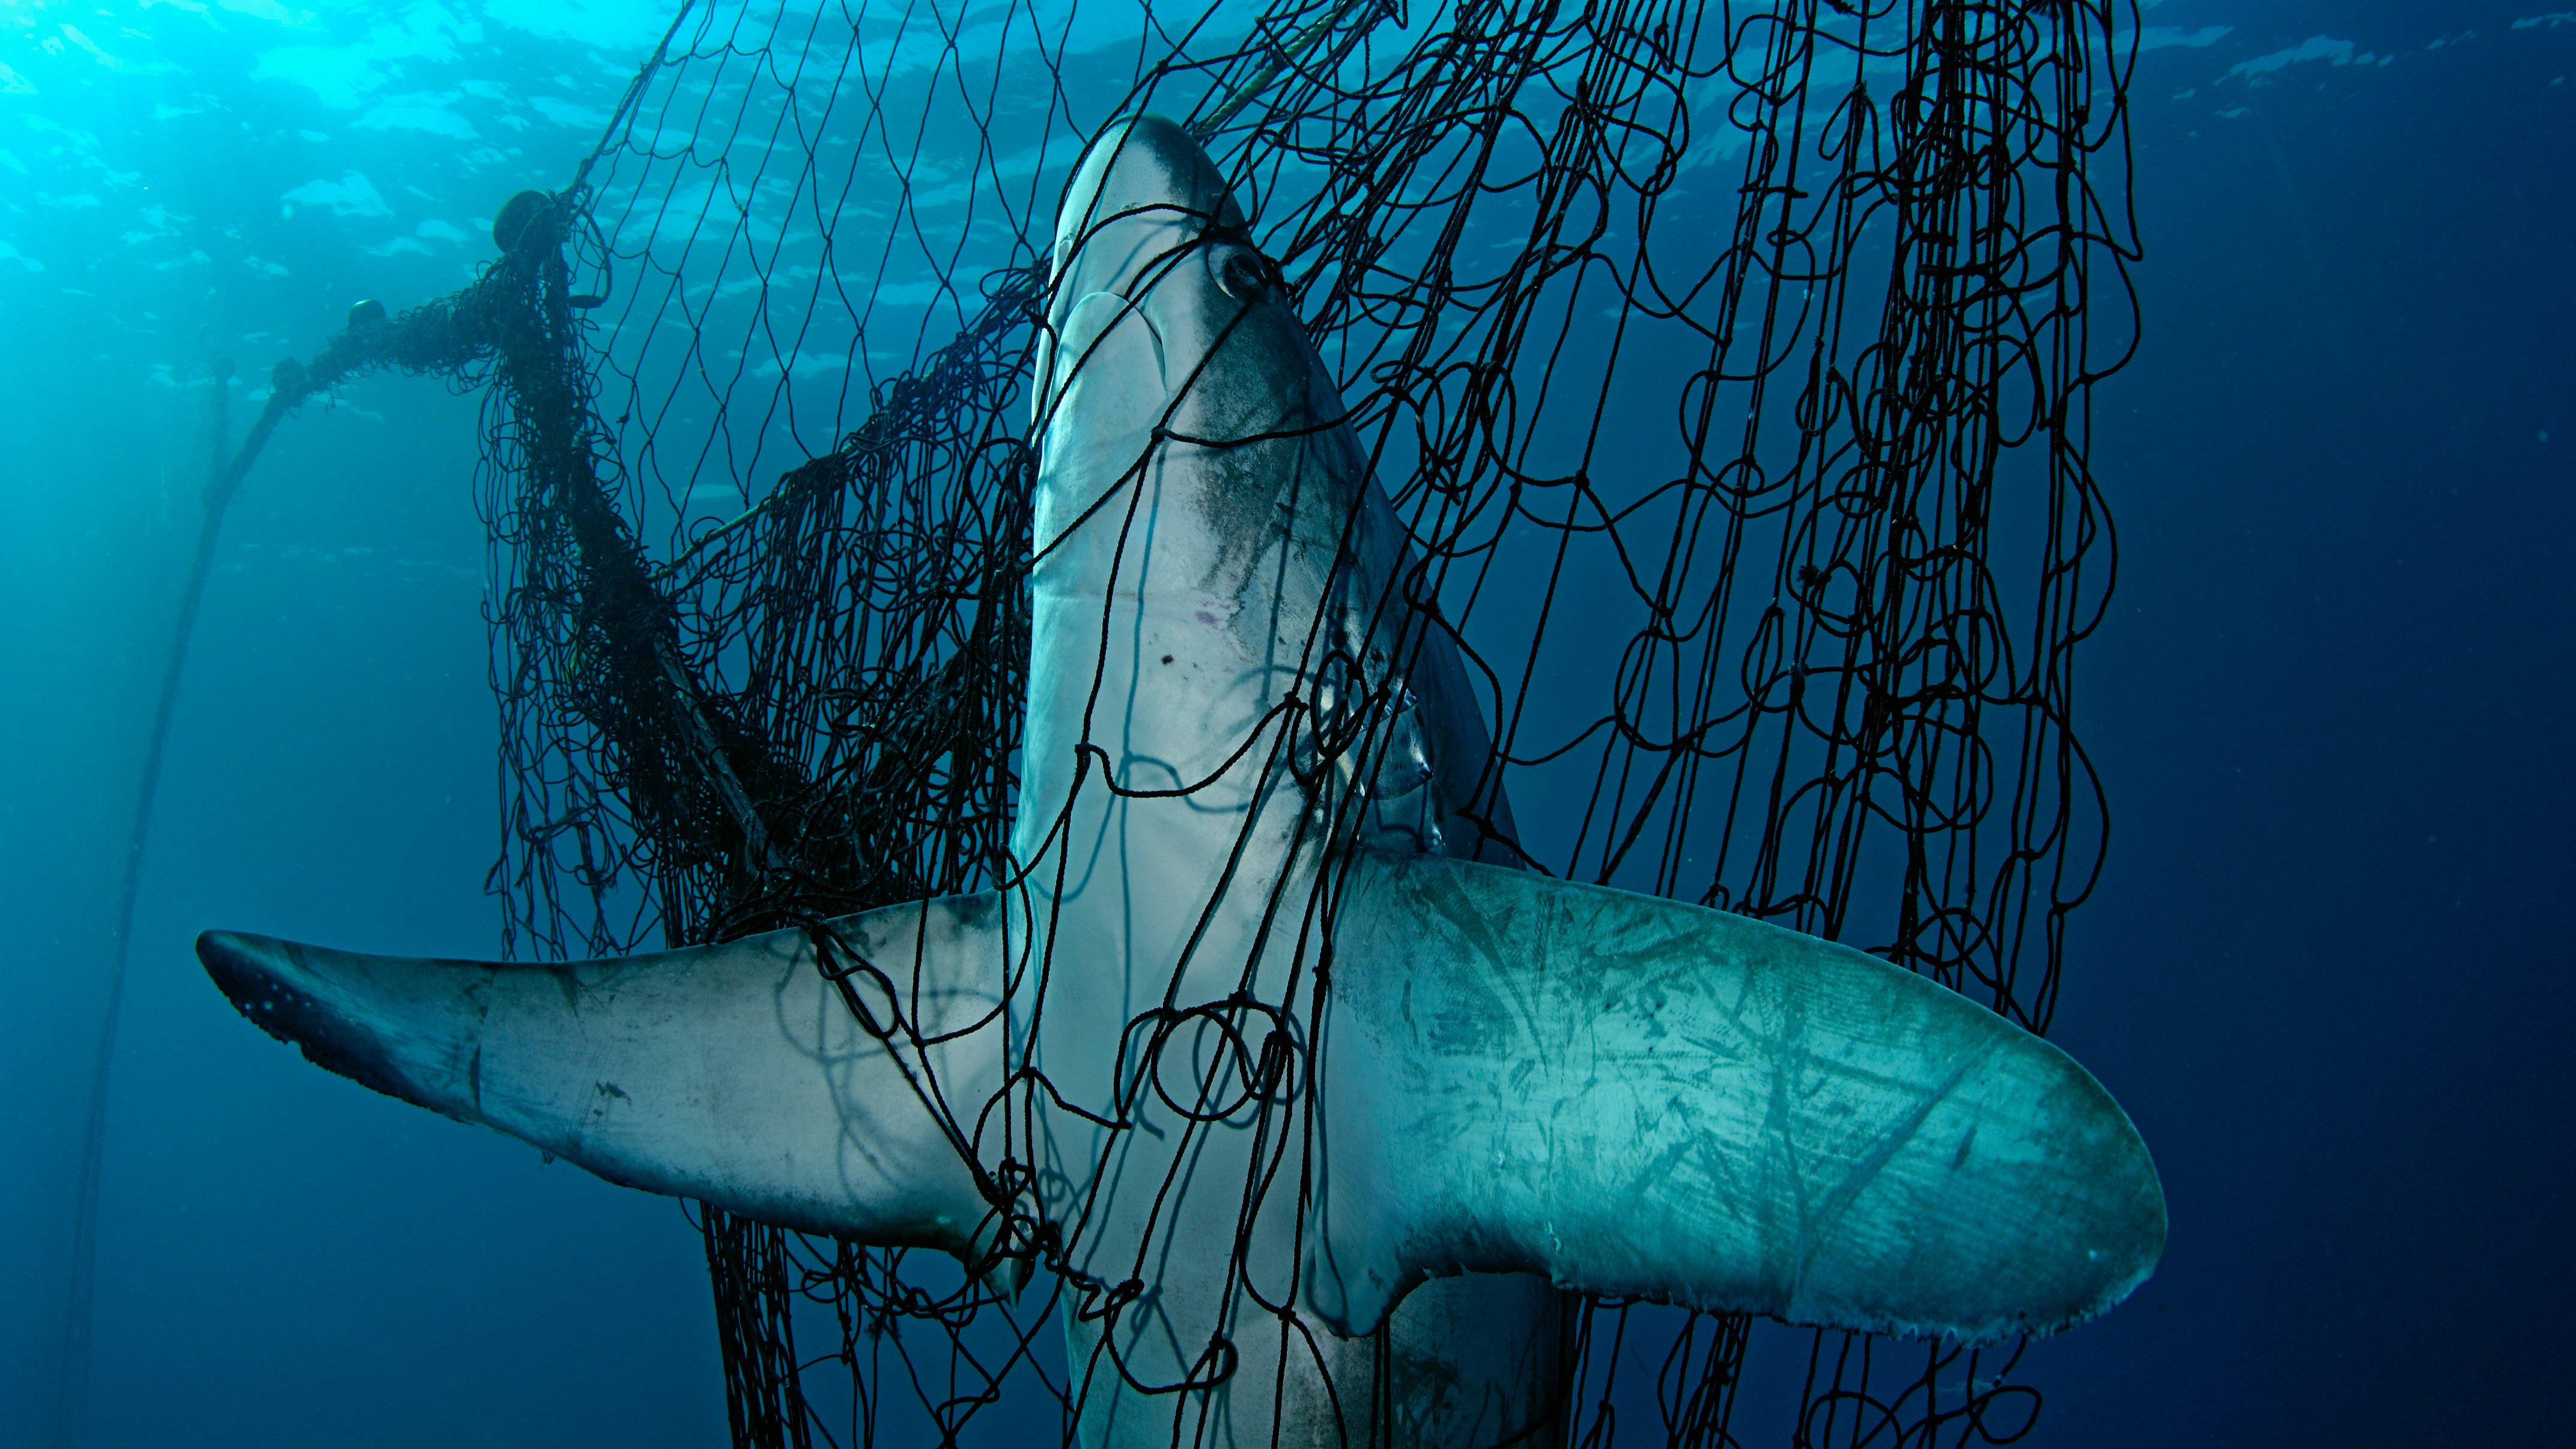 10 Endangered Shark Species You Should Know